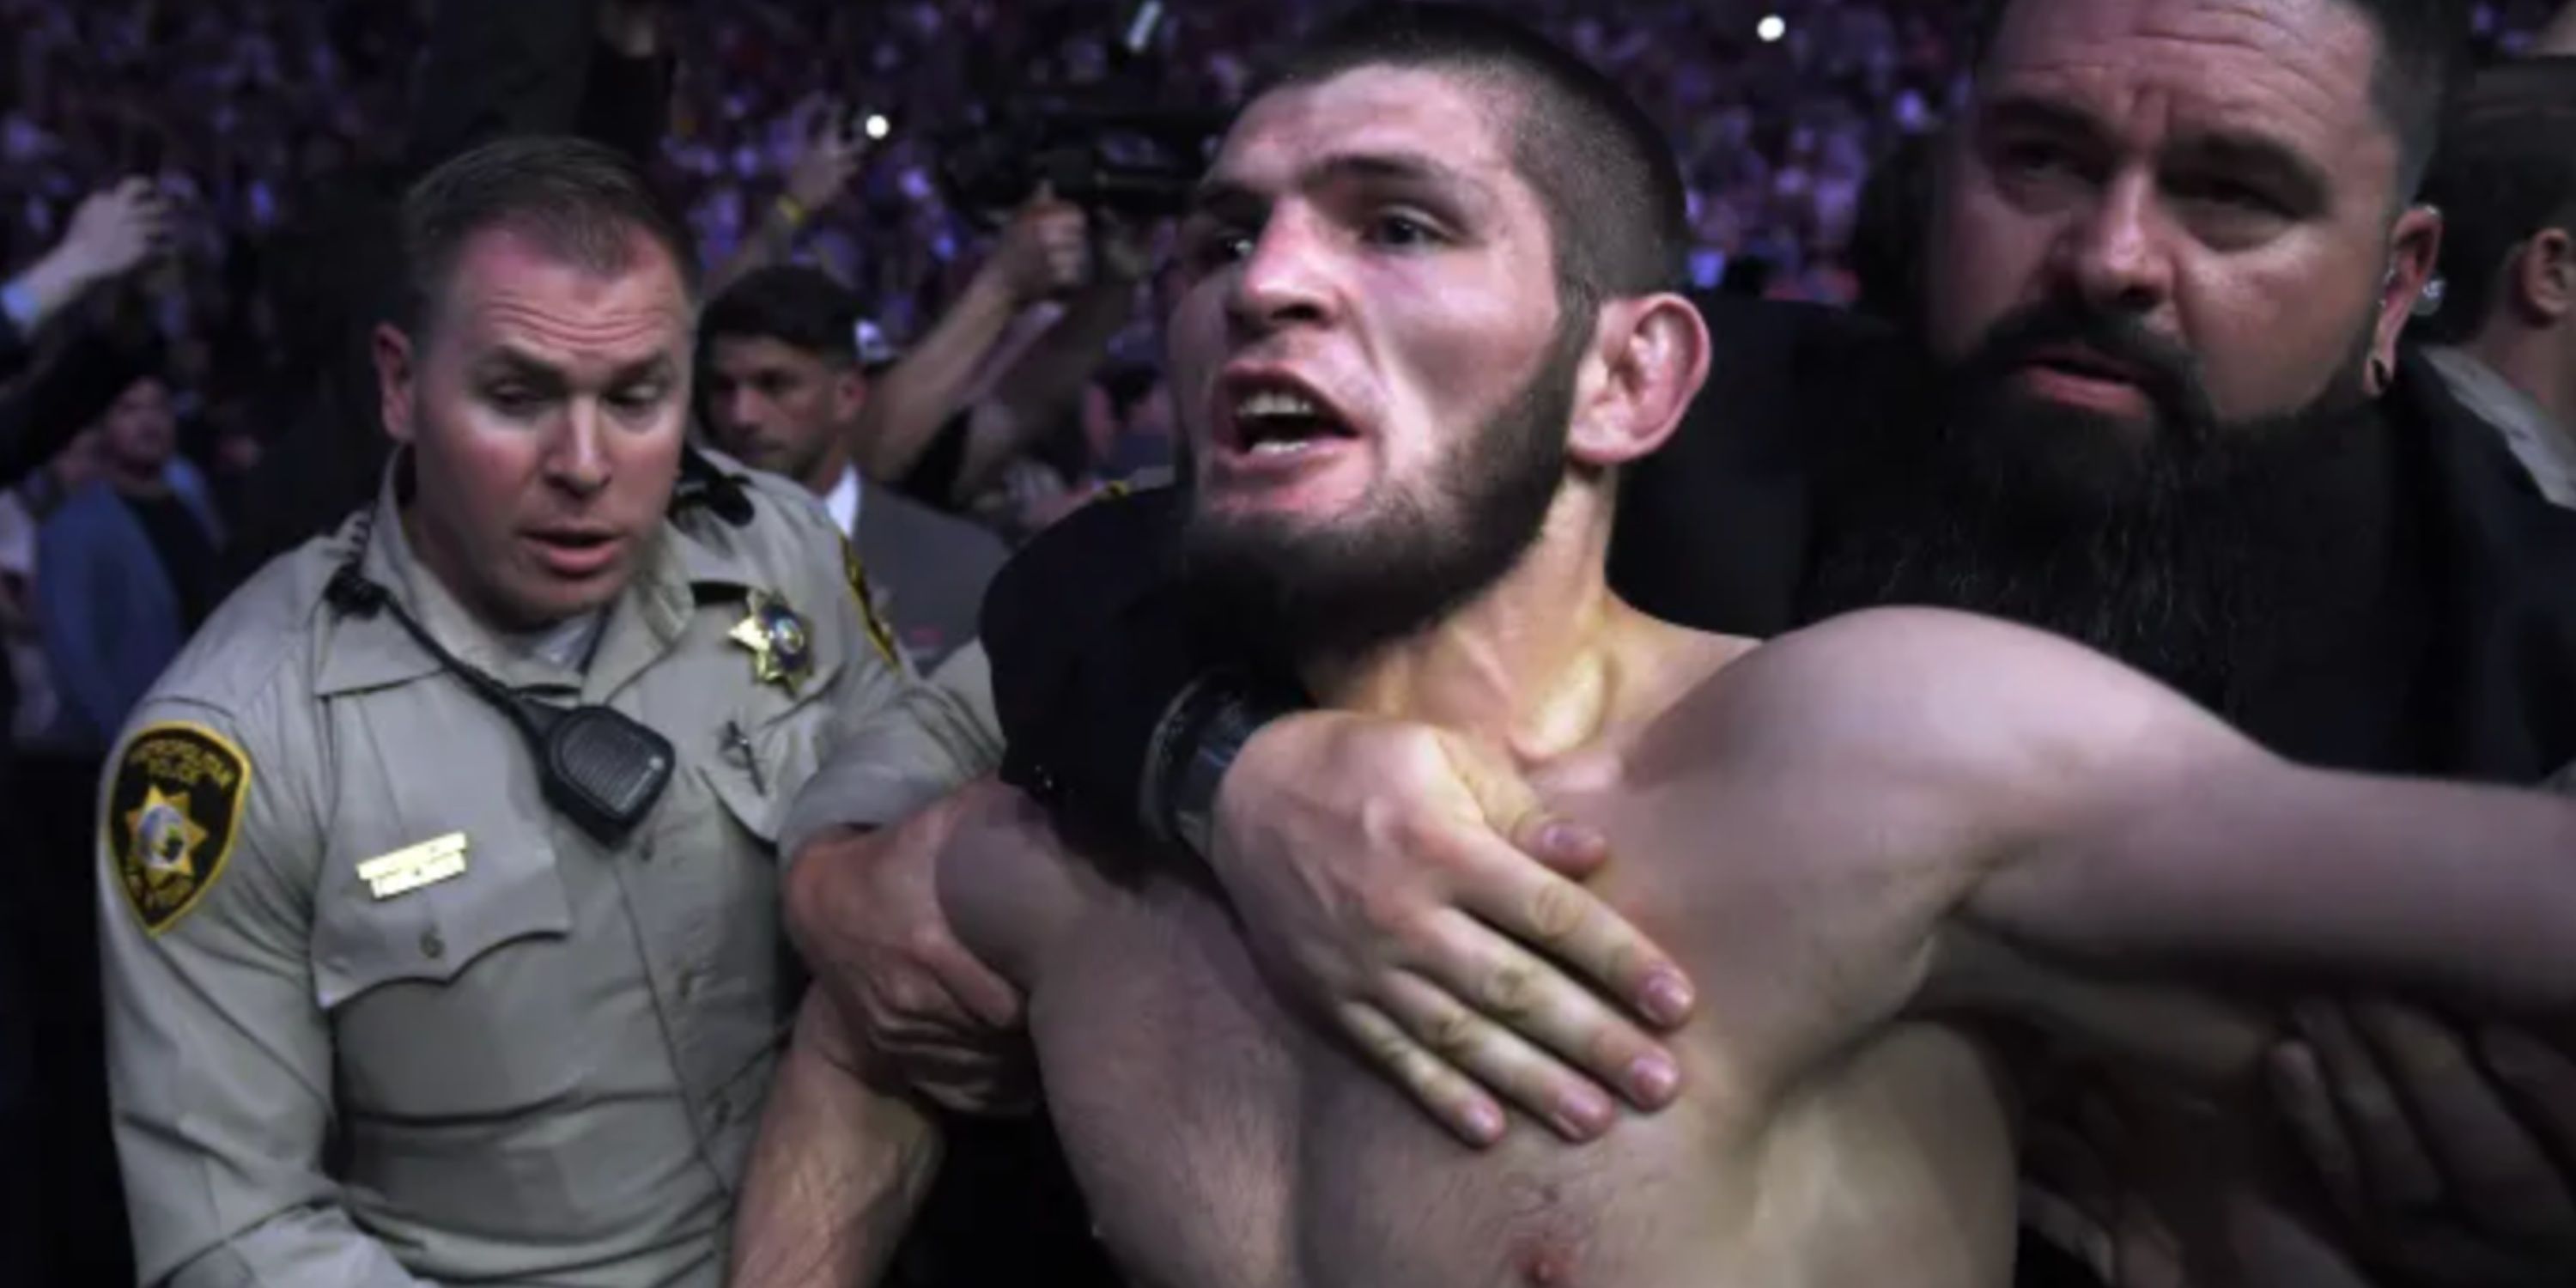 Khabib being restrained during UFC 229 brawl